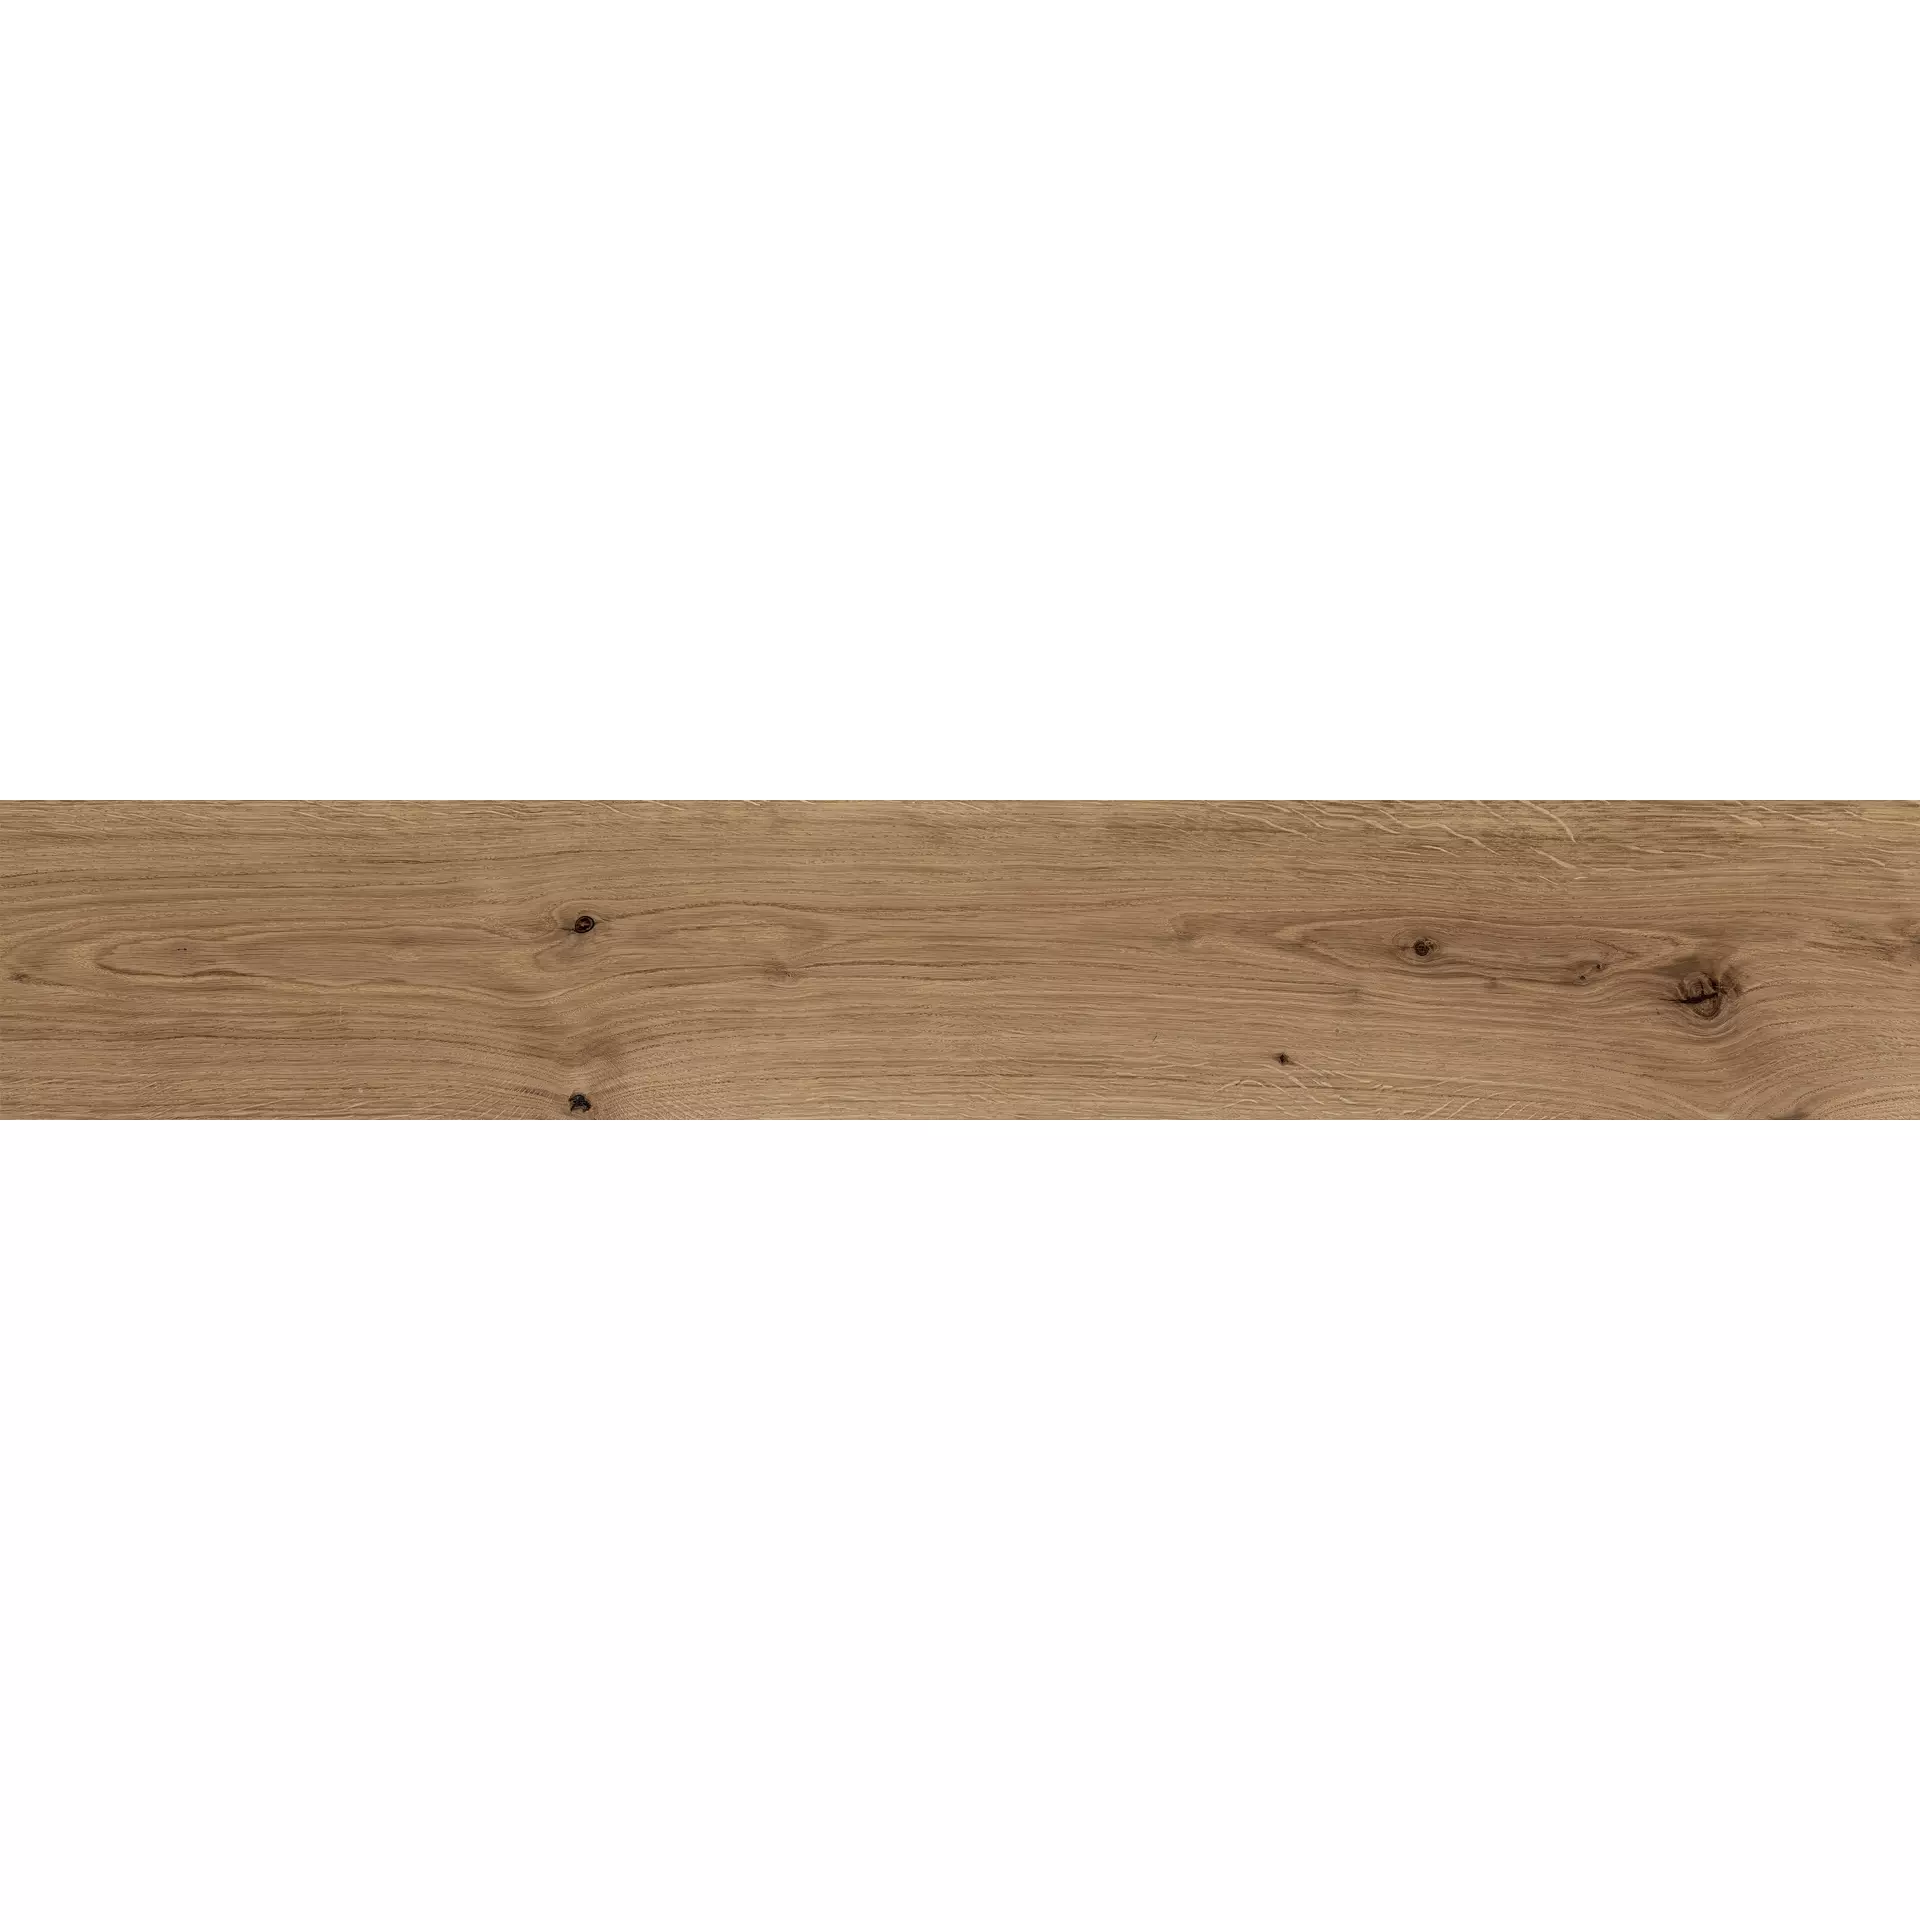 Blustyle Green Wood Oak Naturale BG0GW20 20x120cm 9,5mm